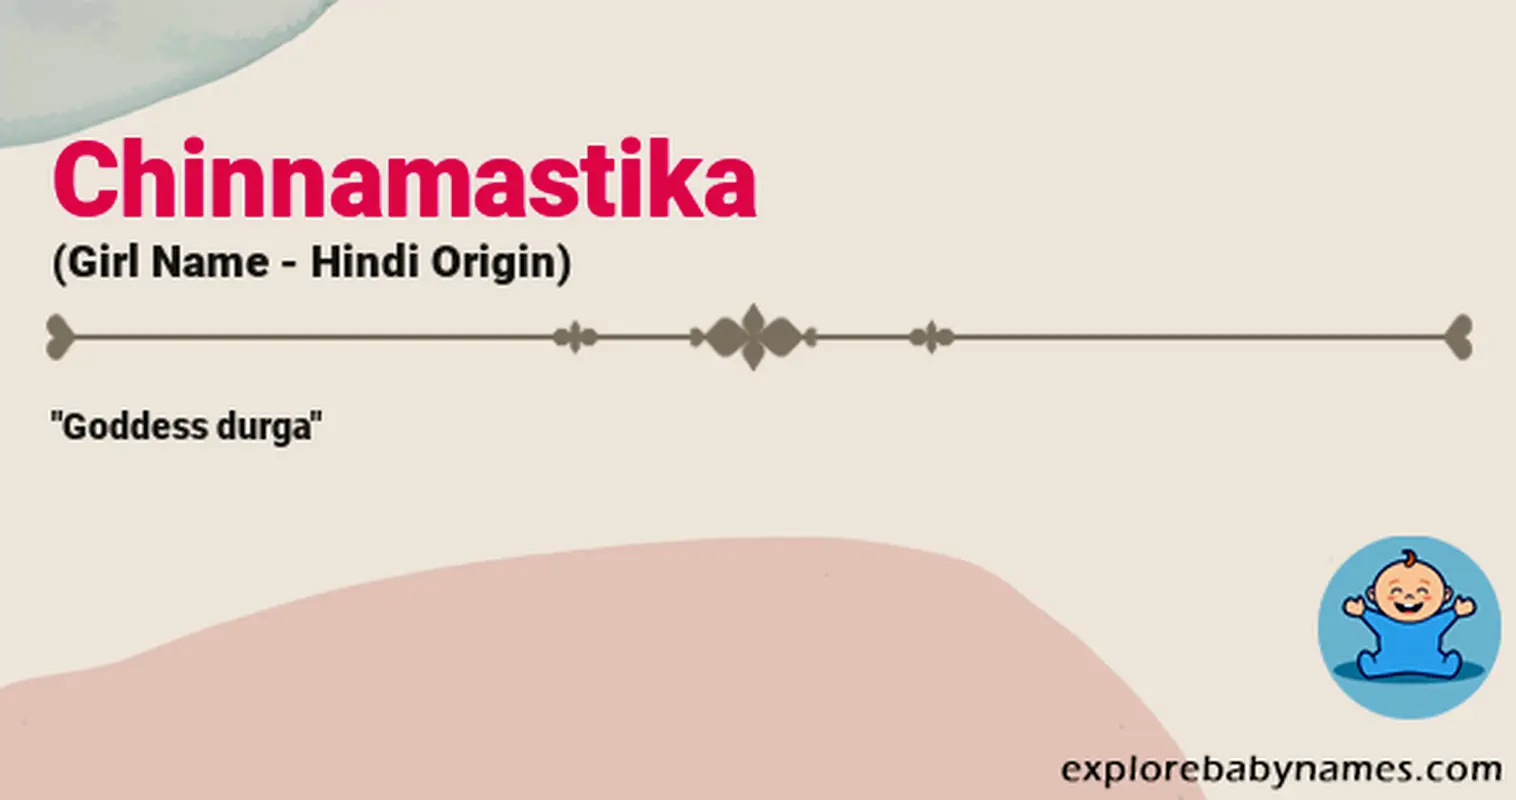 Meaning of Chinnamastika